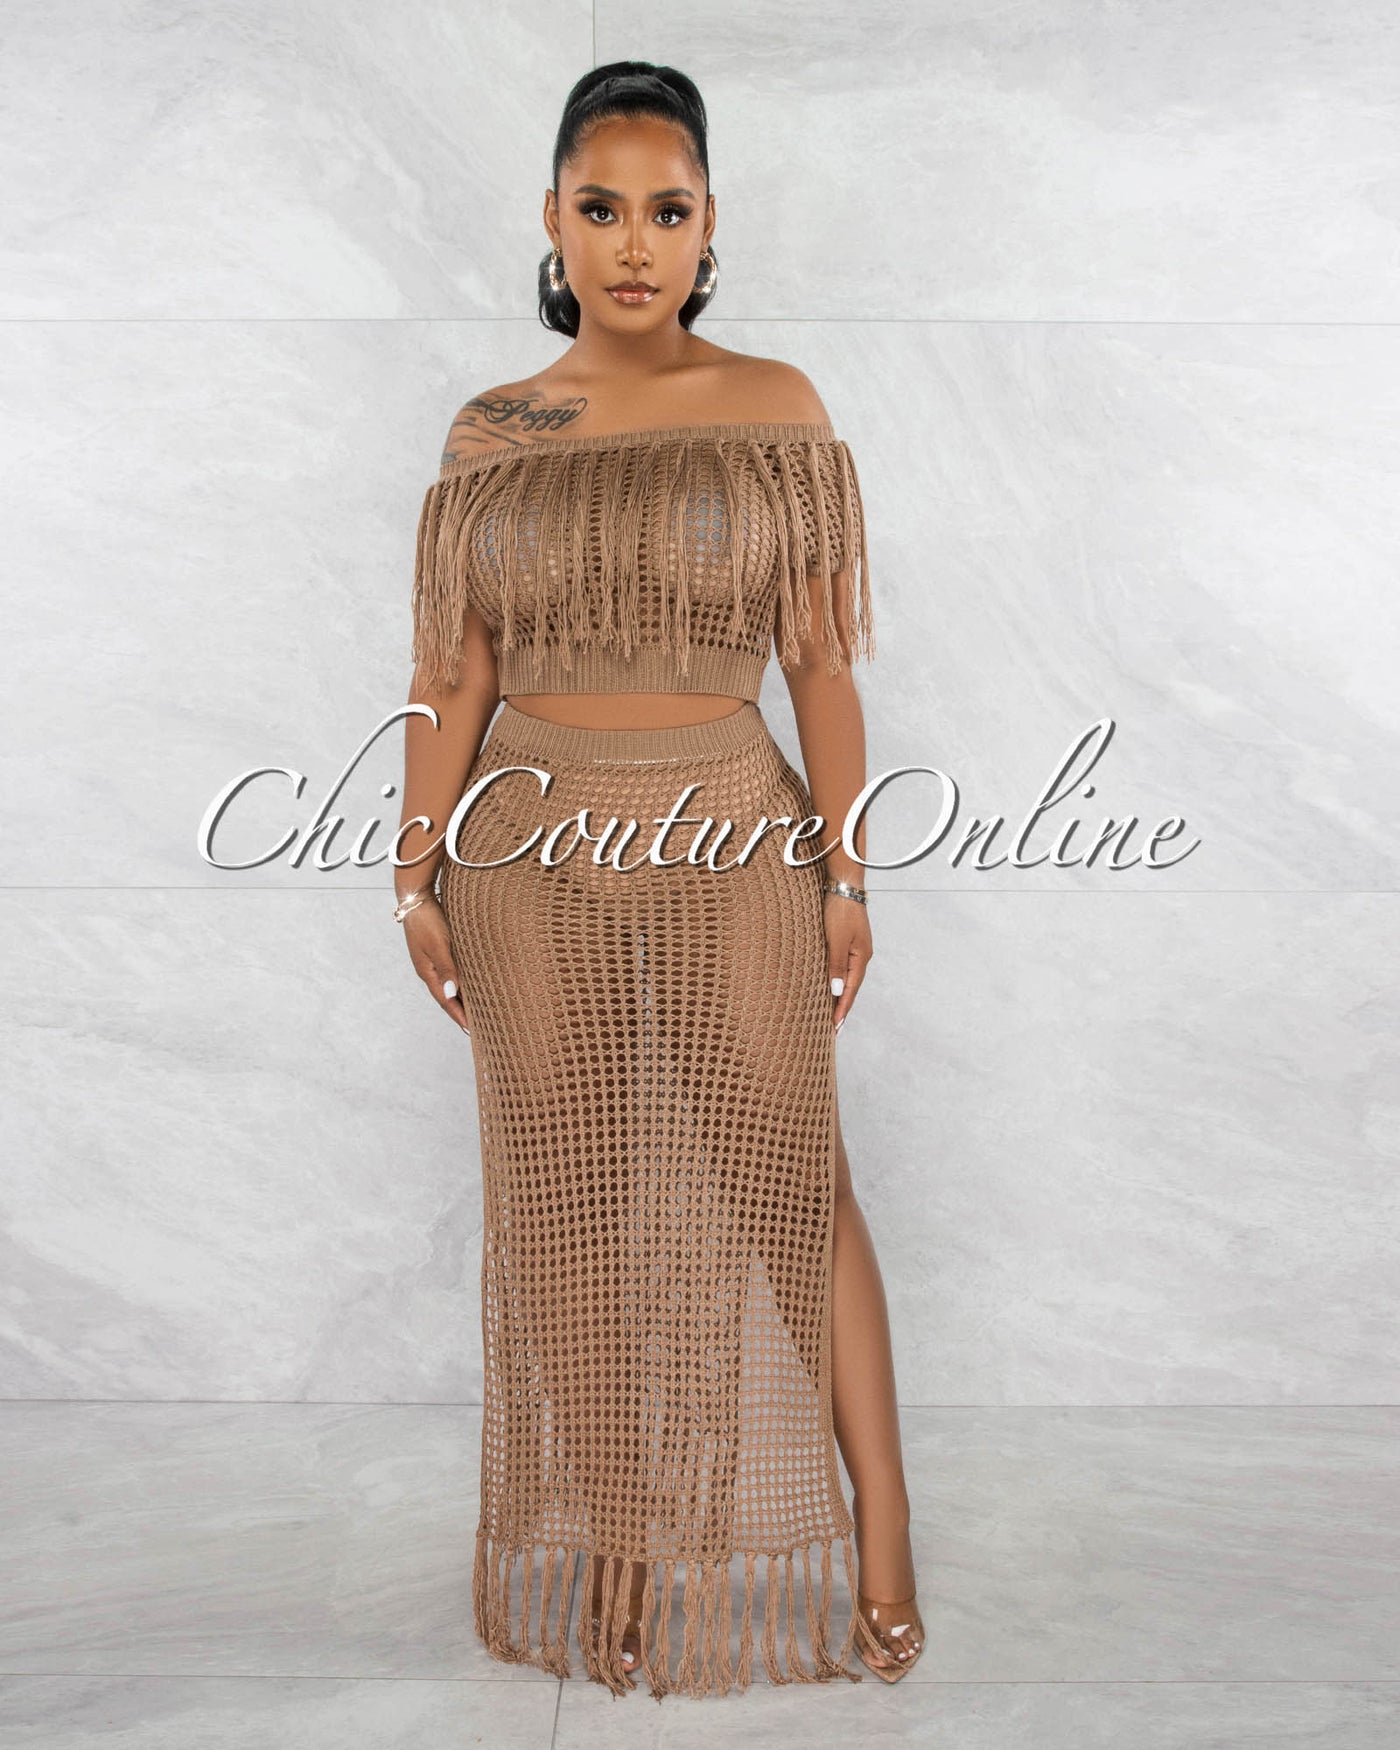 *Jocelin Mocha Crop Top & Crochet Cover-Up Maxi Skirt Set